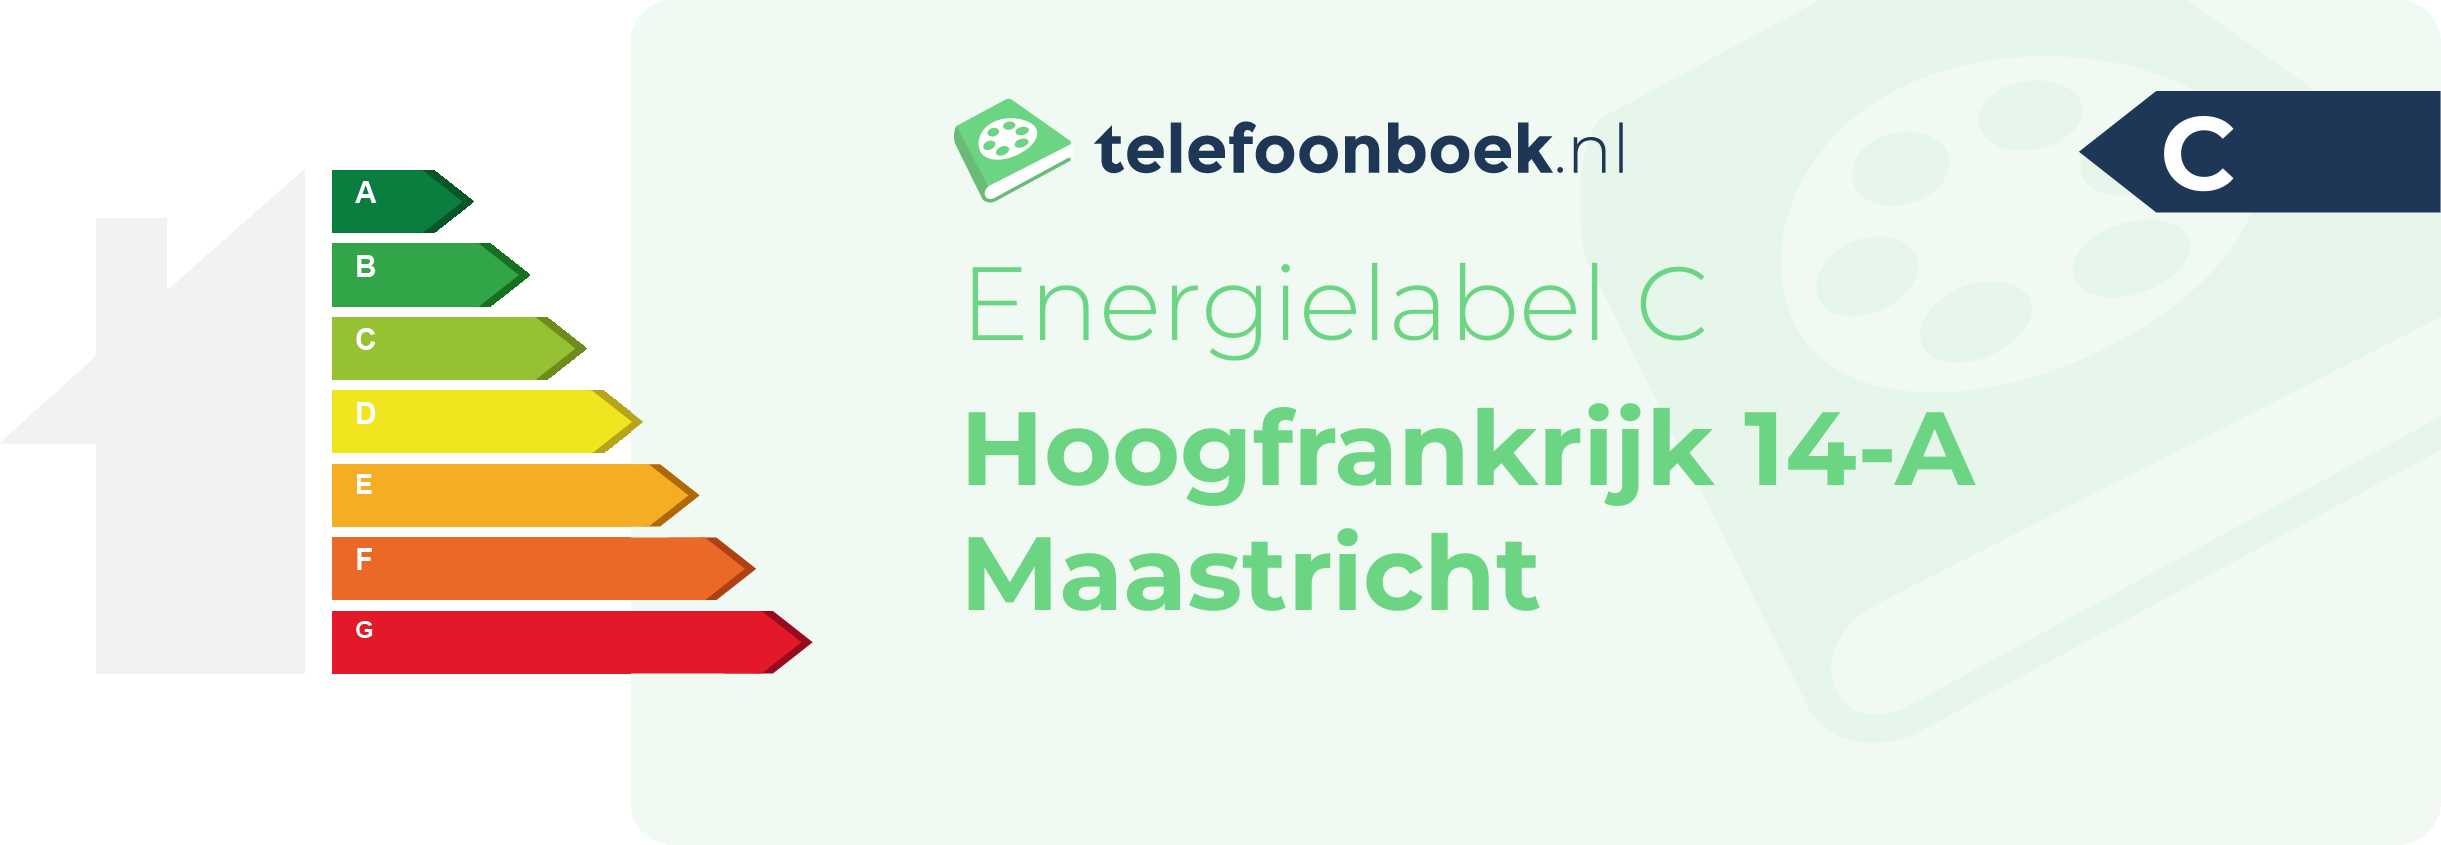 Energielabel Hoogfrankrijk 14-A Maastricht